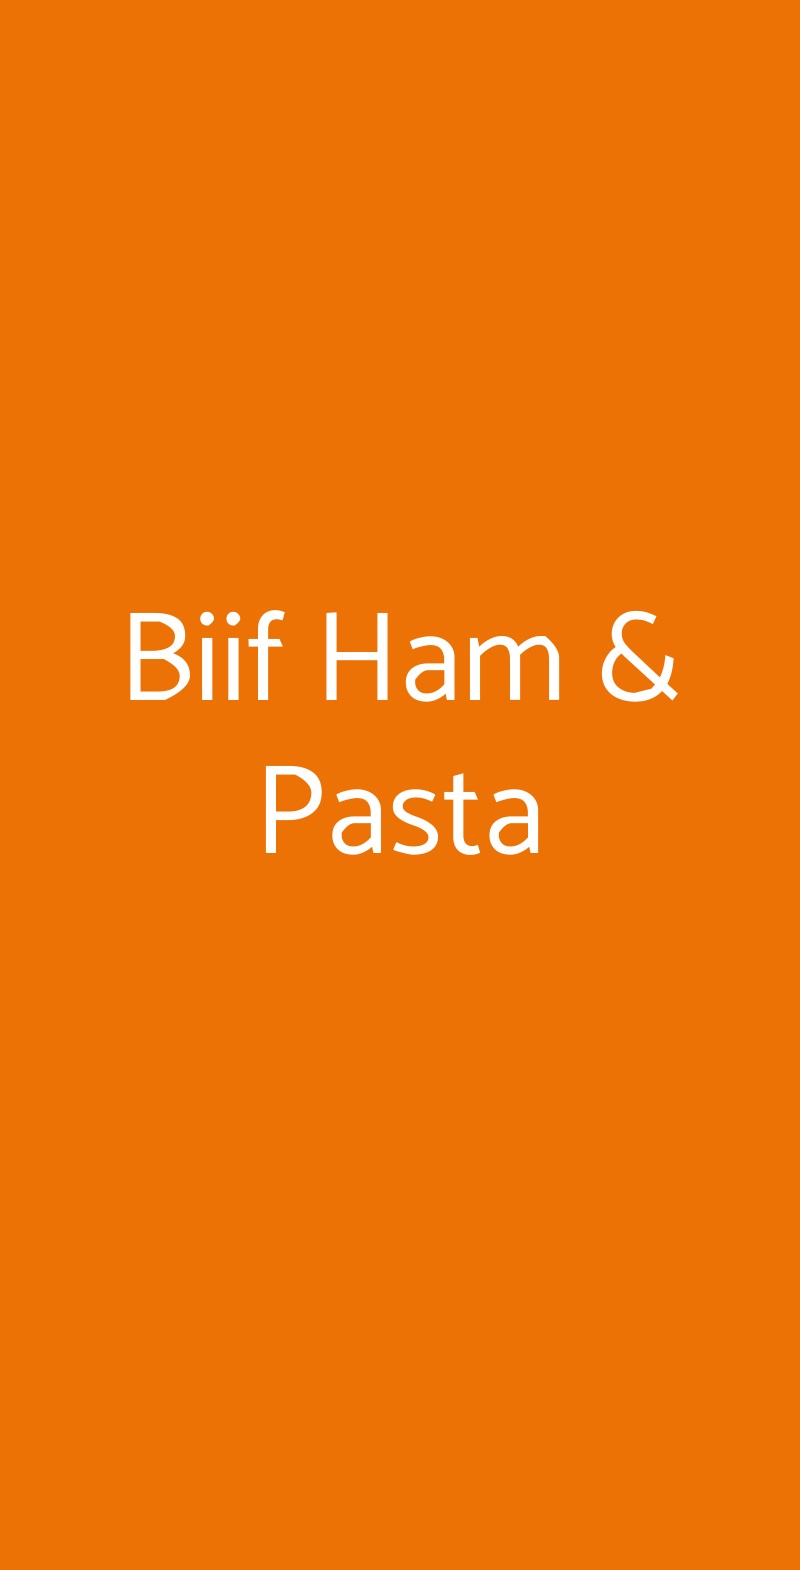 Biif Ham & Pasta Milano menù 1 pagina